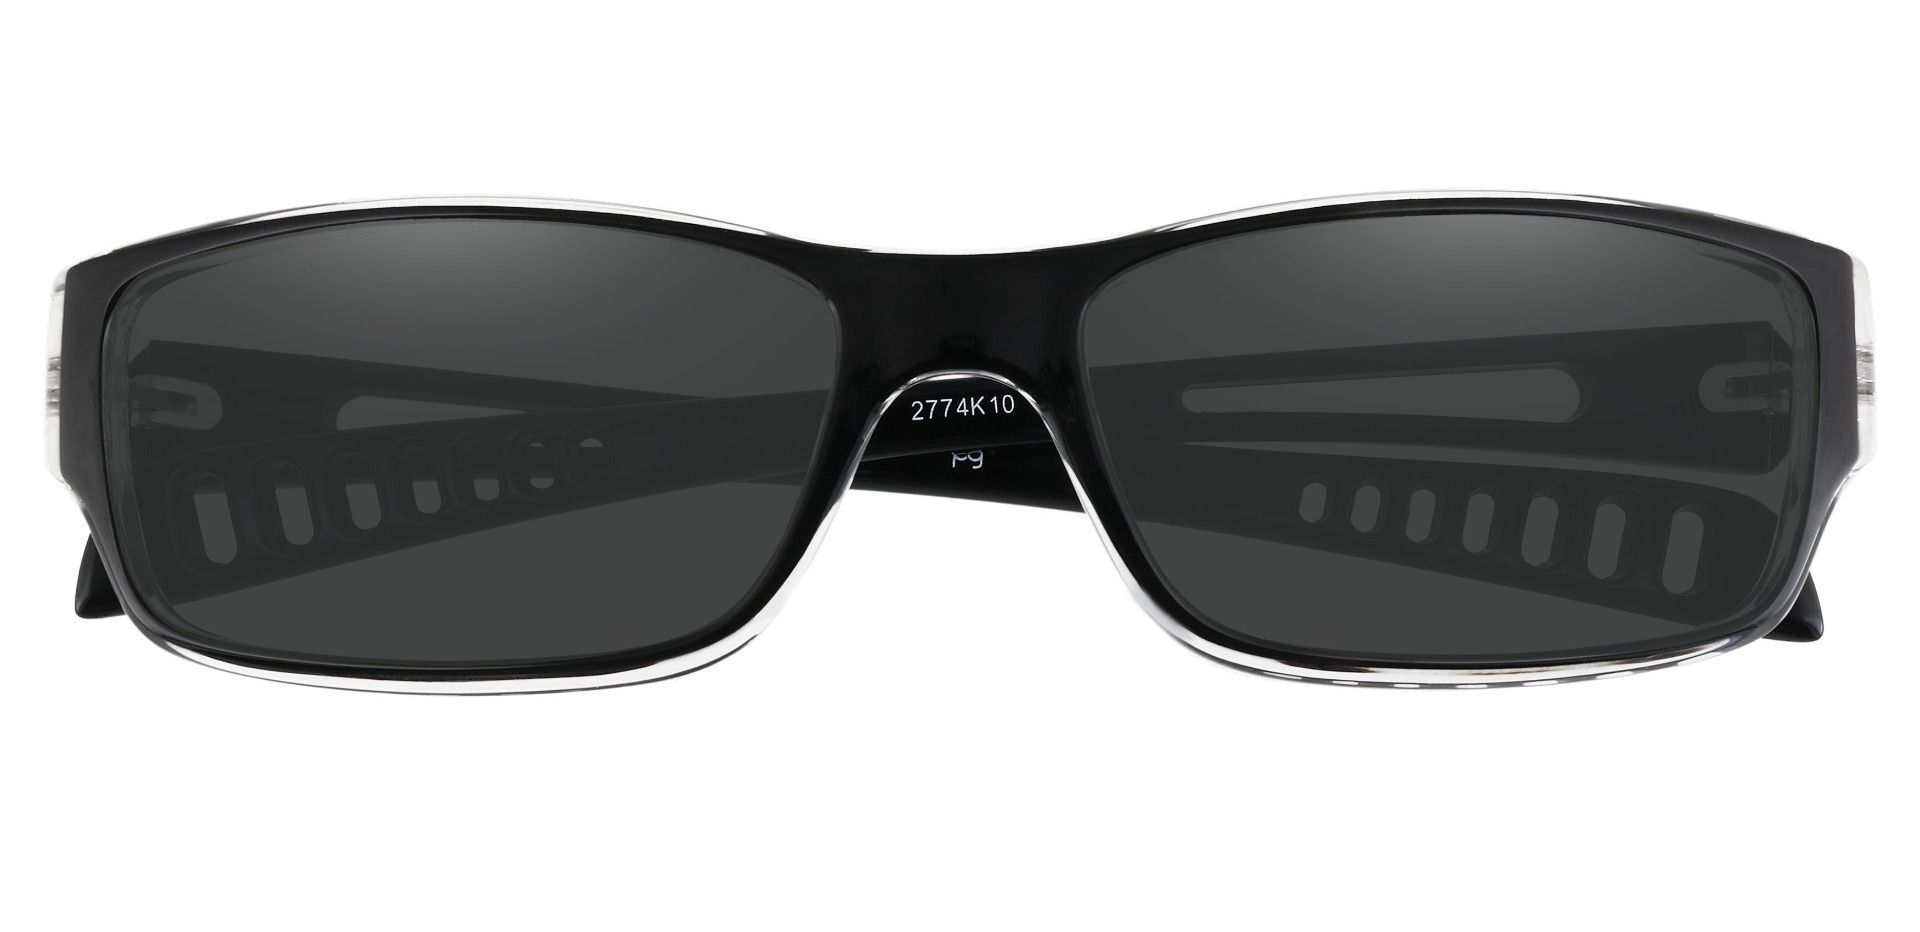 Mercury Rectangle Prescription Sunglasses - Black Frame With Gray Lenses